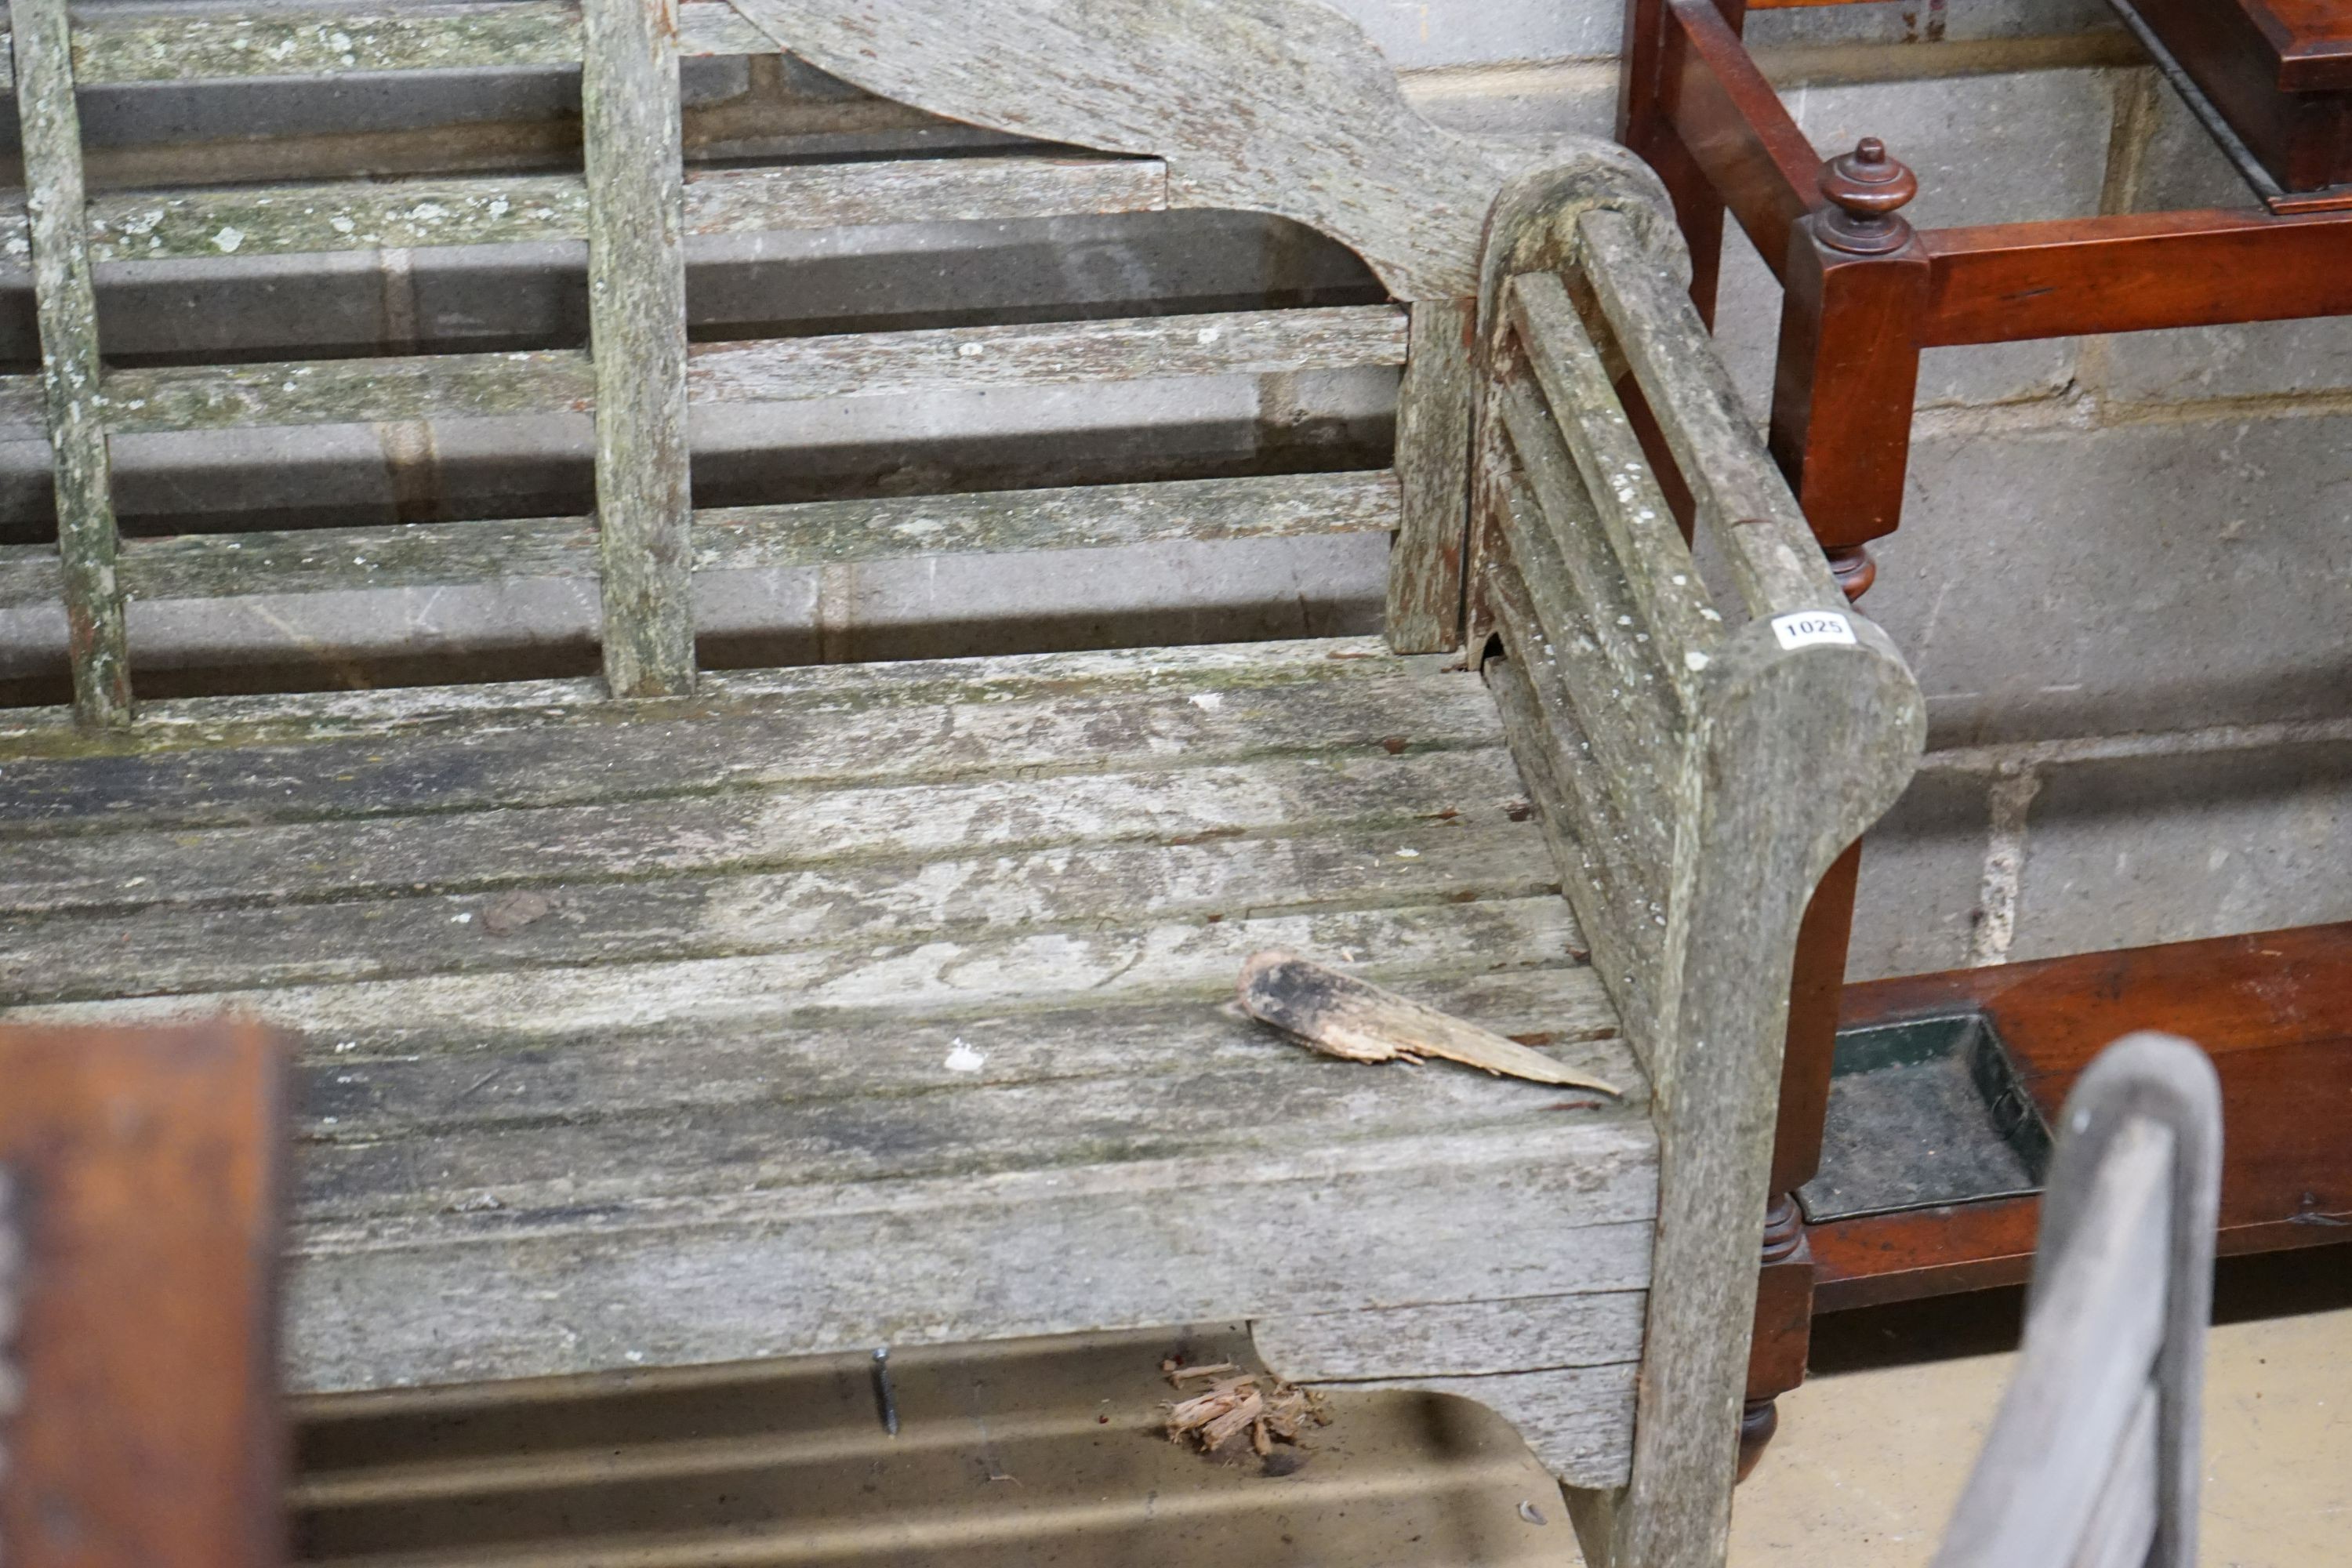 A Lutyens style teak garden bench, length 158cm, depth 51cm, height 98cm